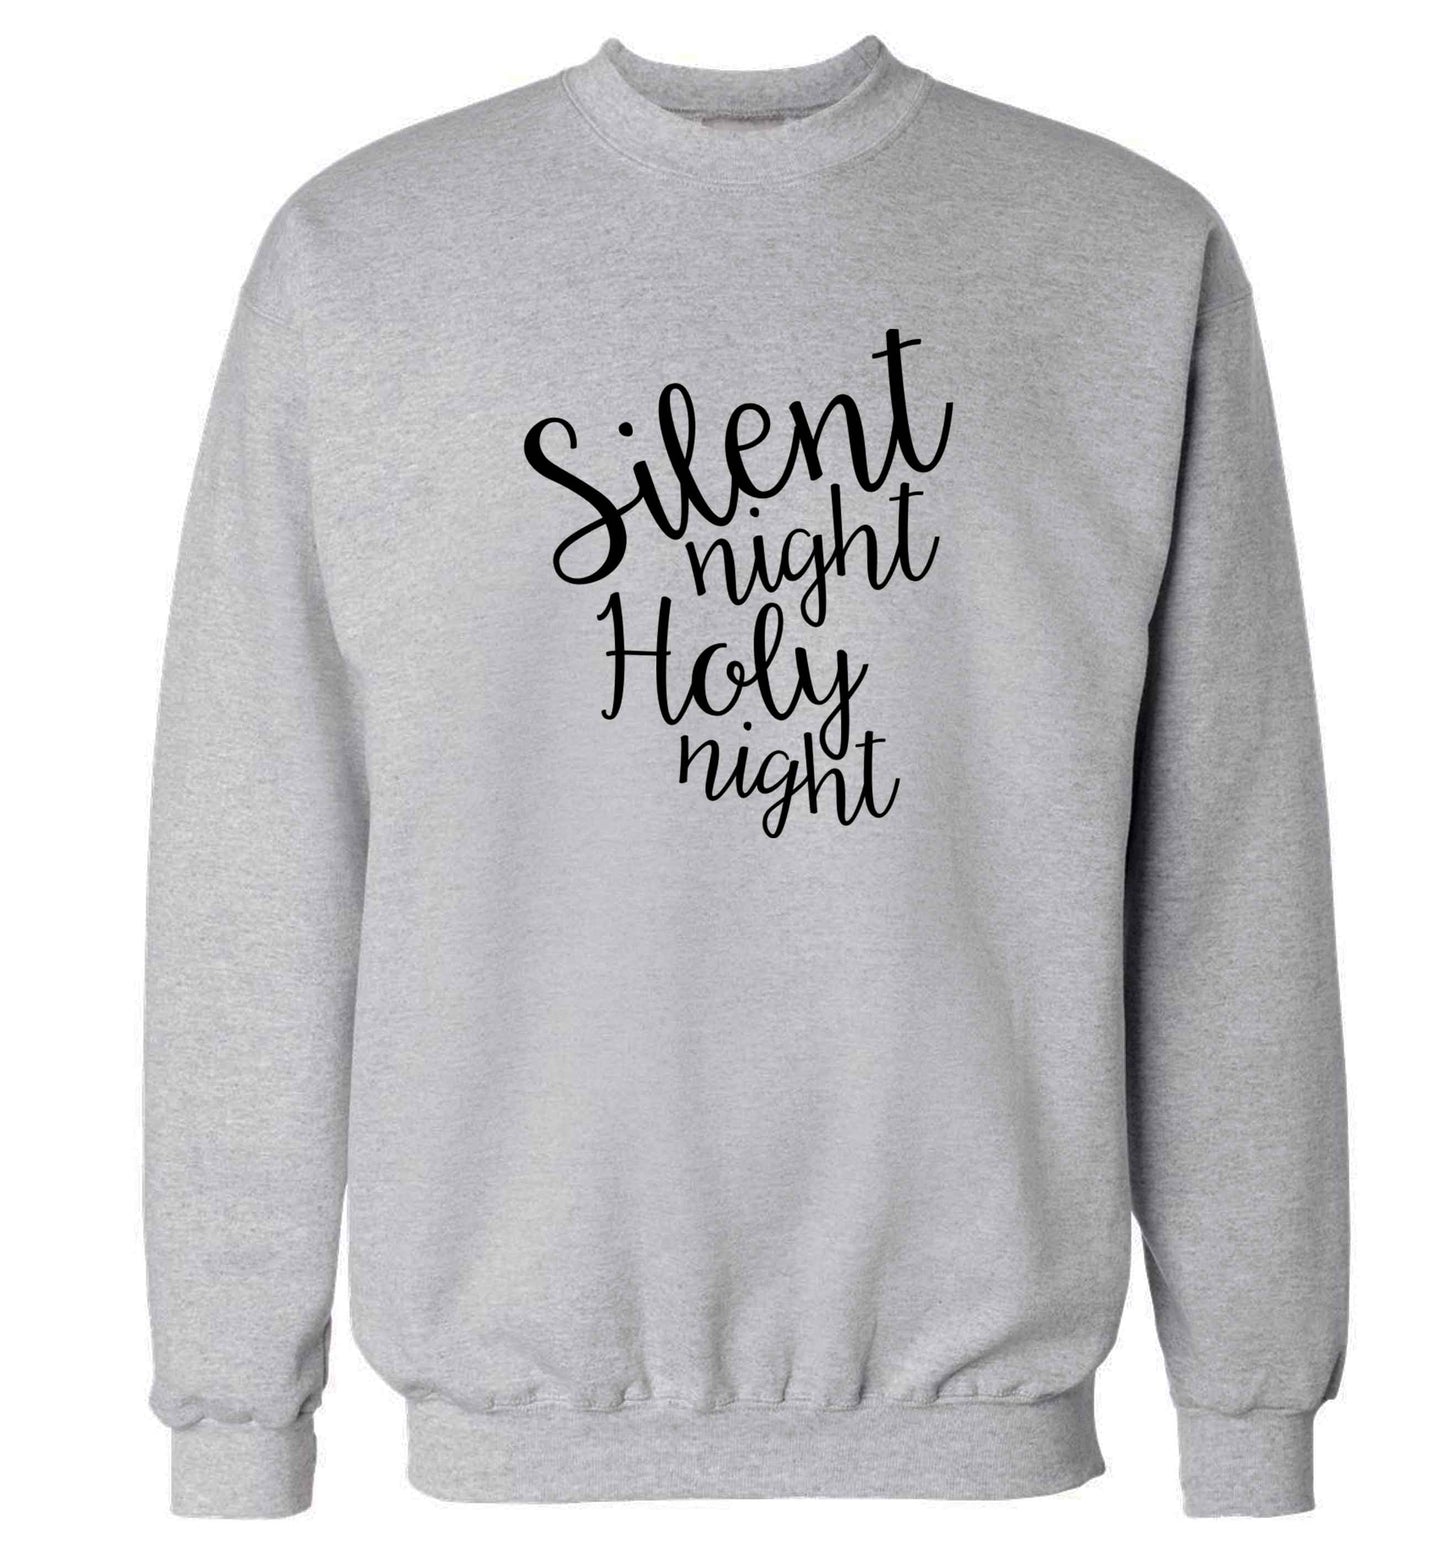 Silent night holy night adult's unisex grey sweater 2XL